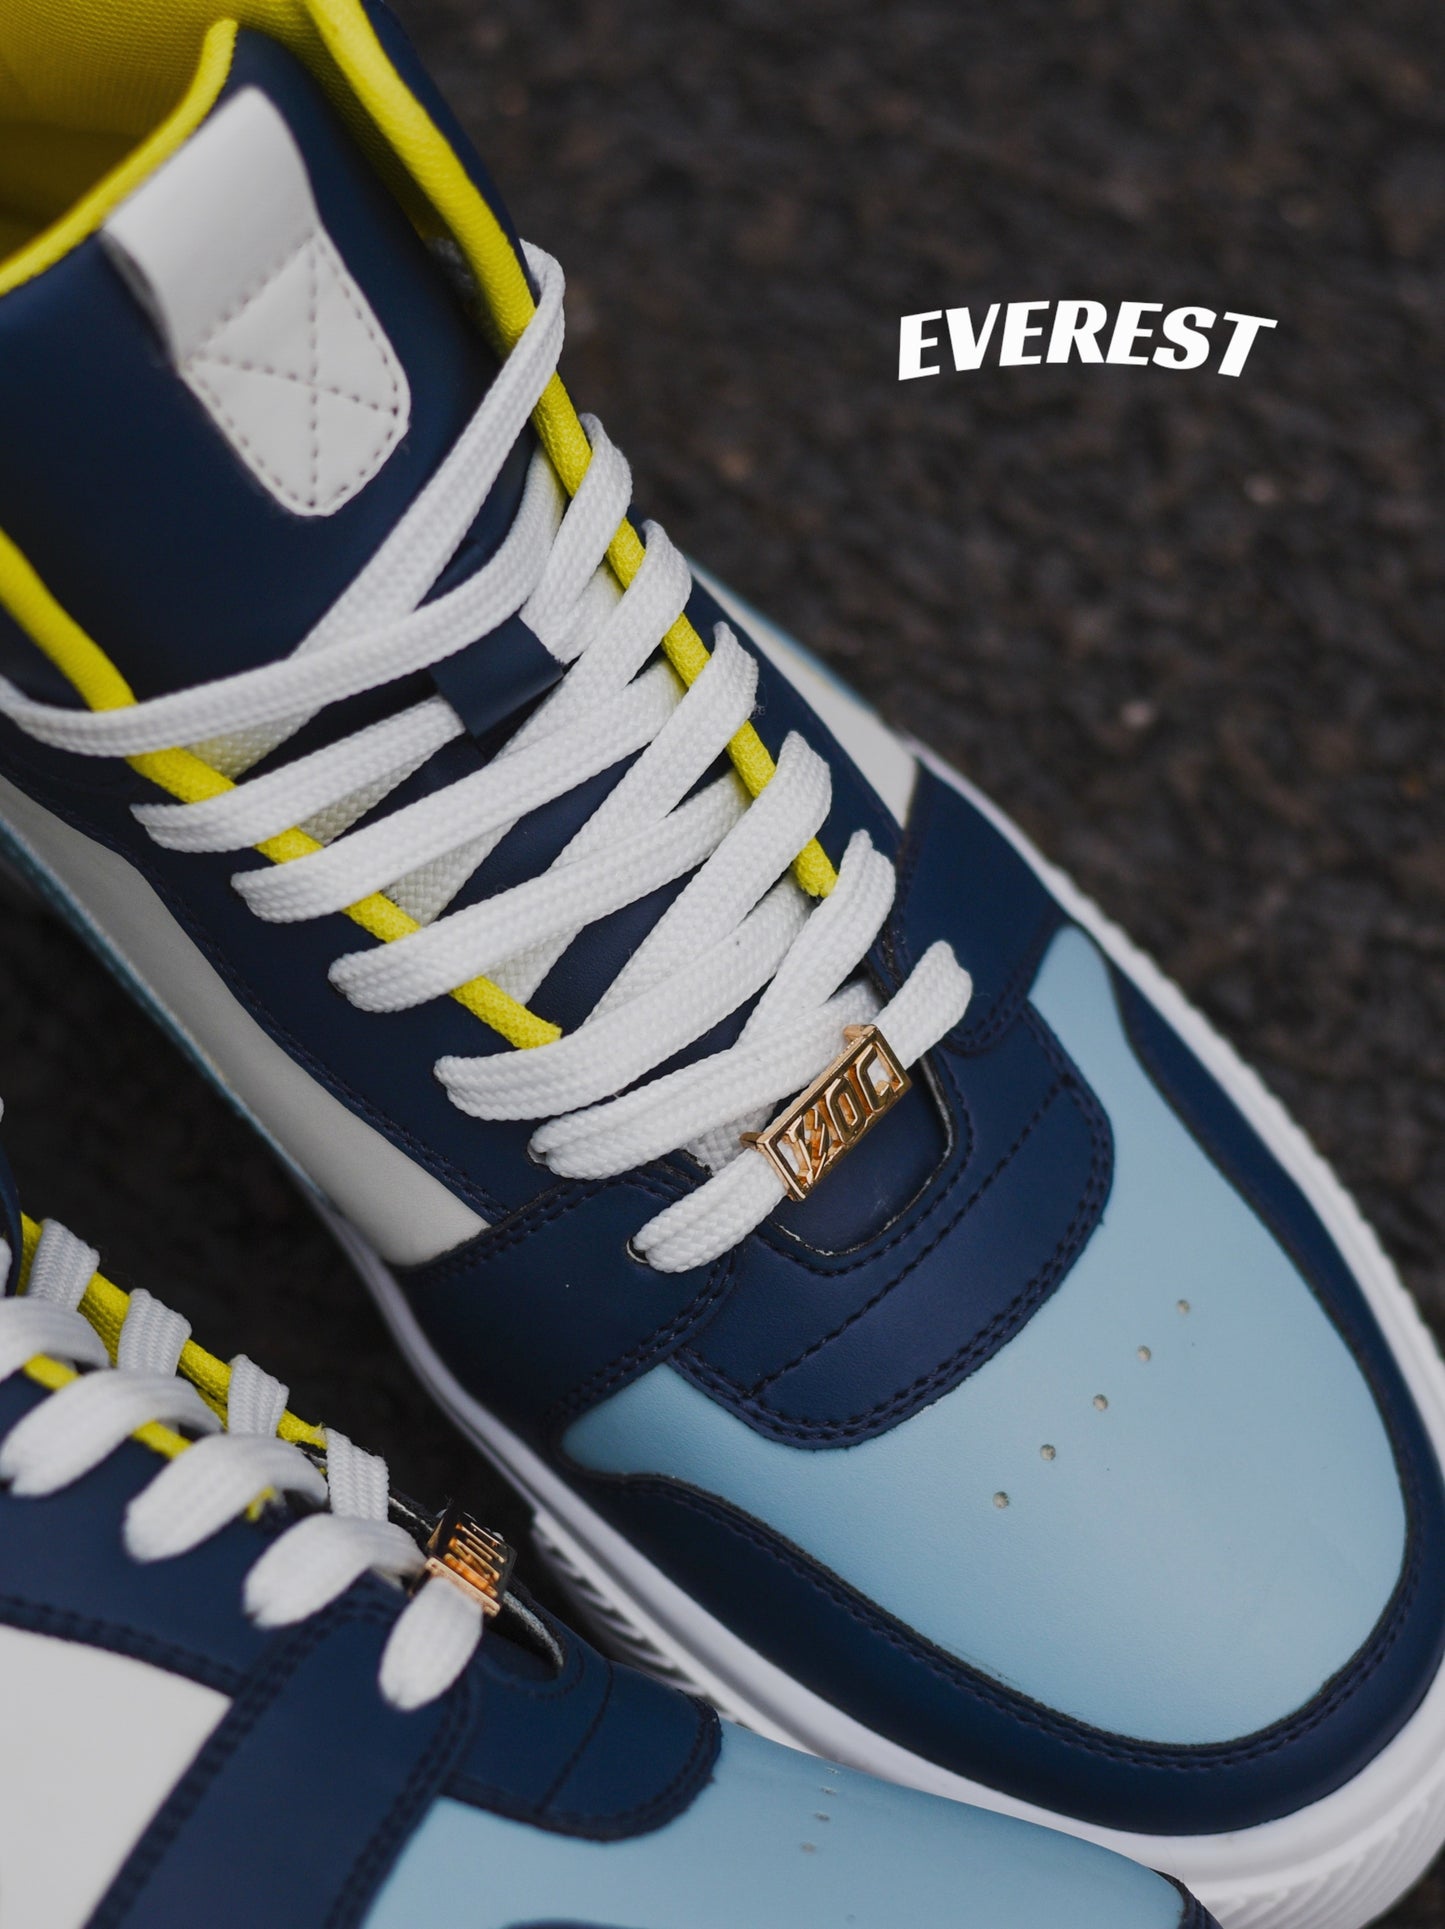 Everest HT / Blue